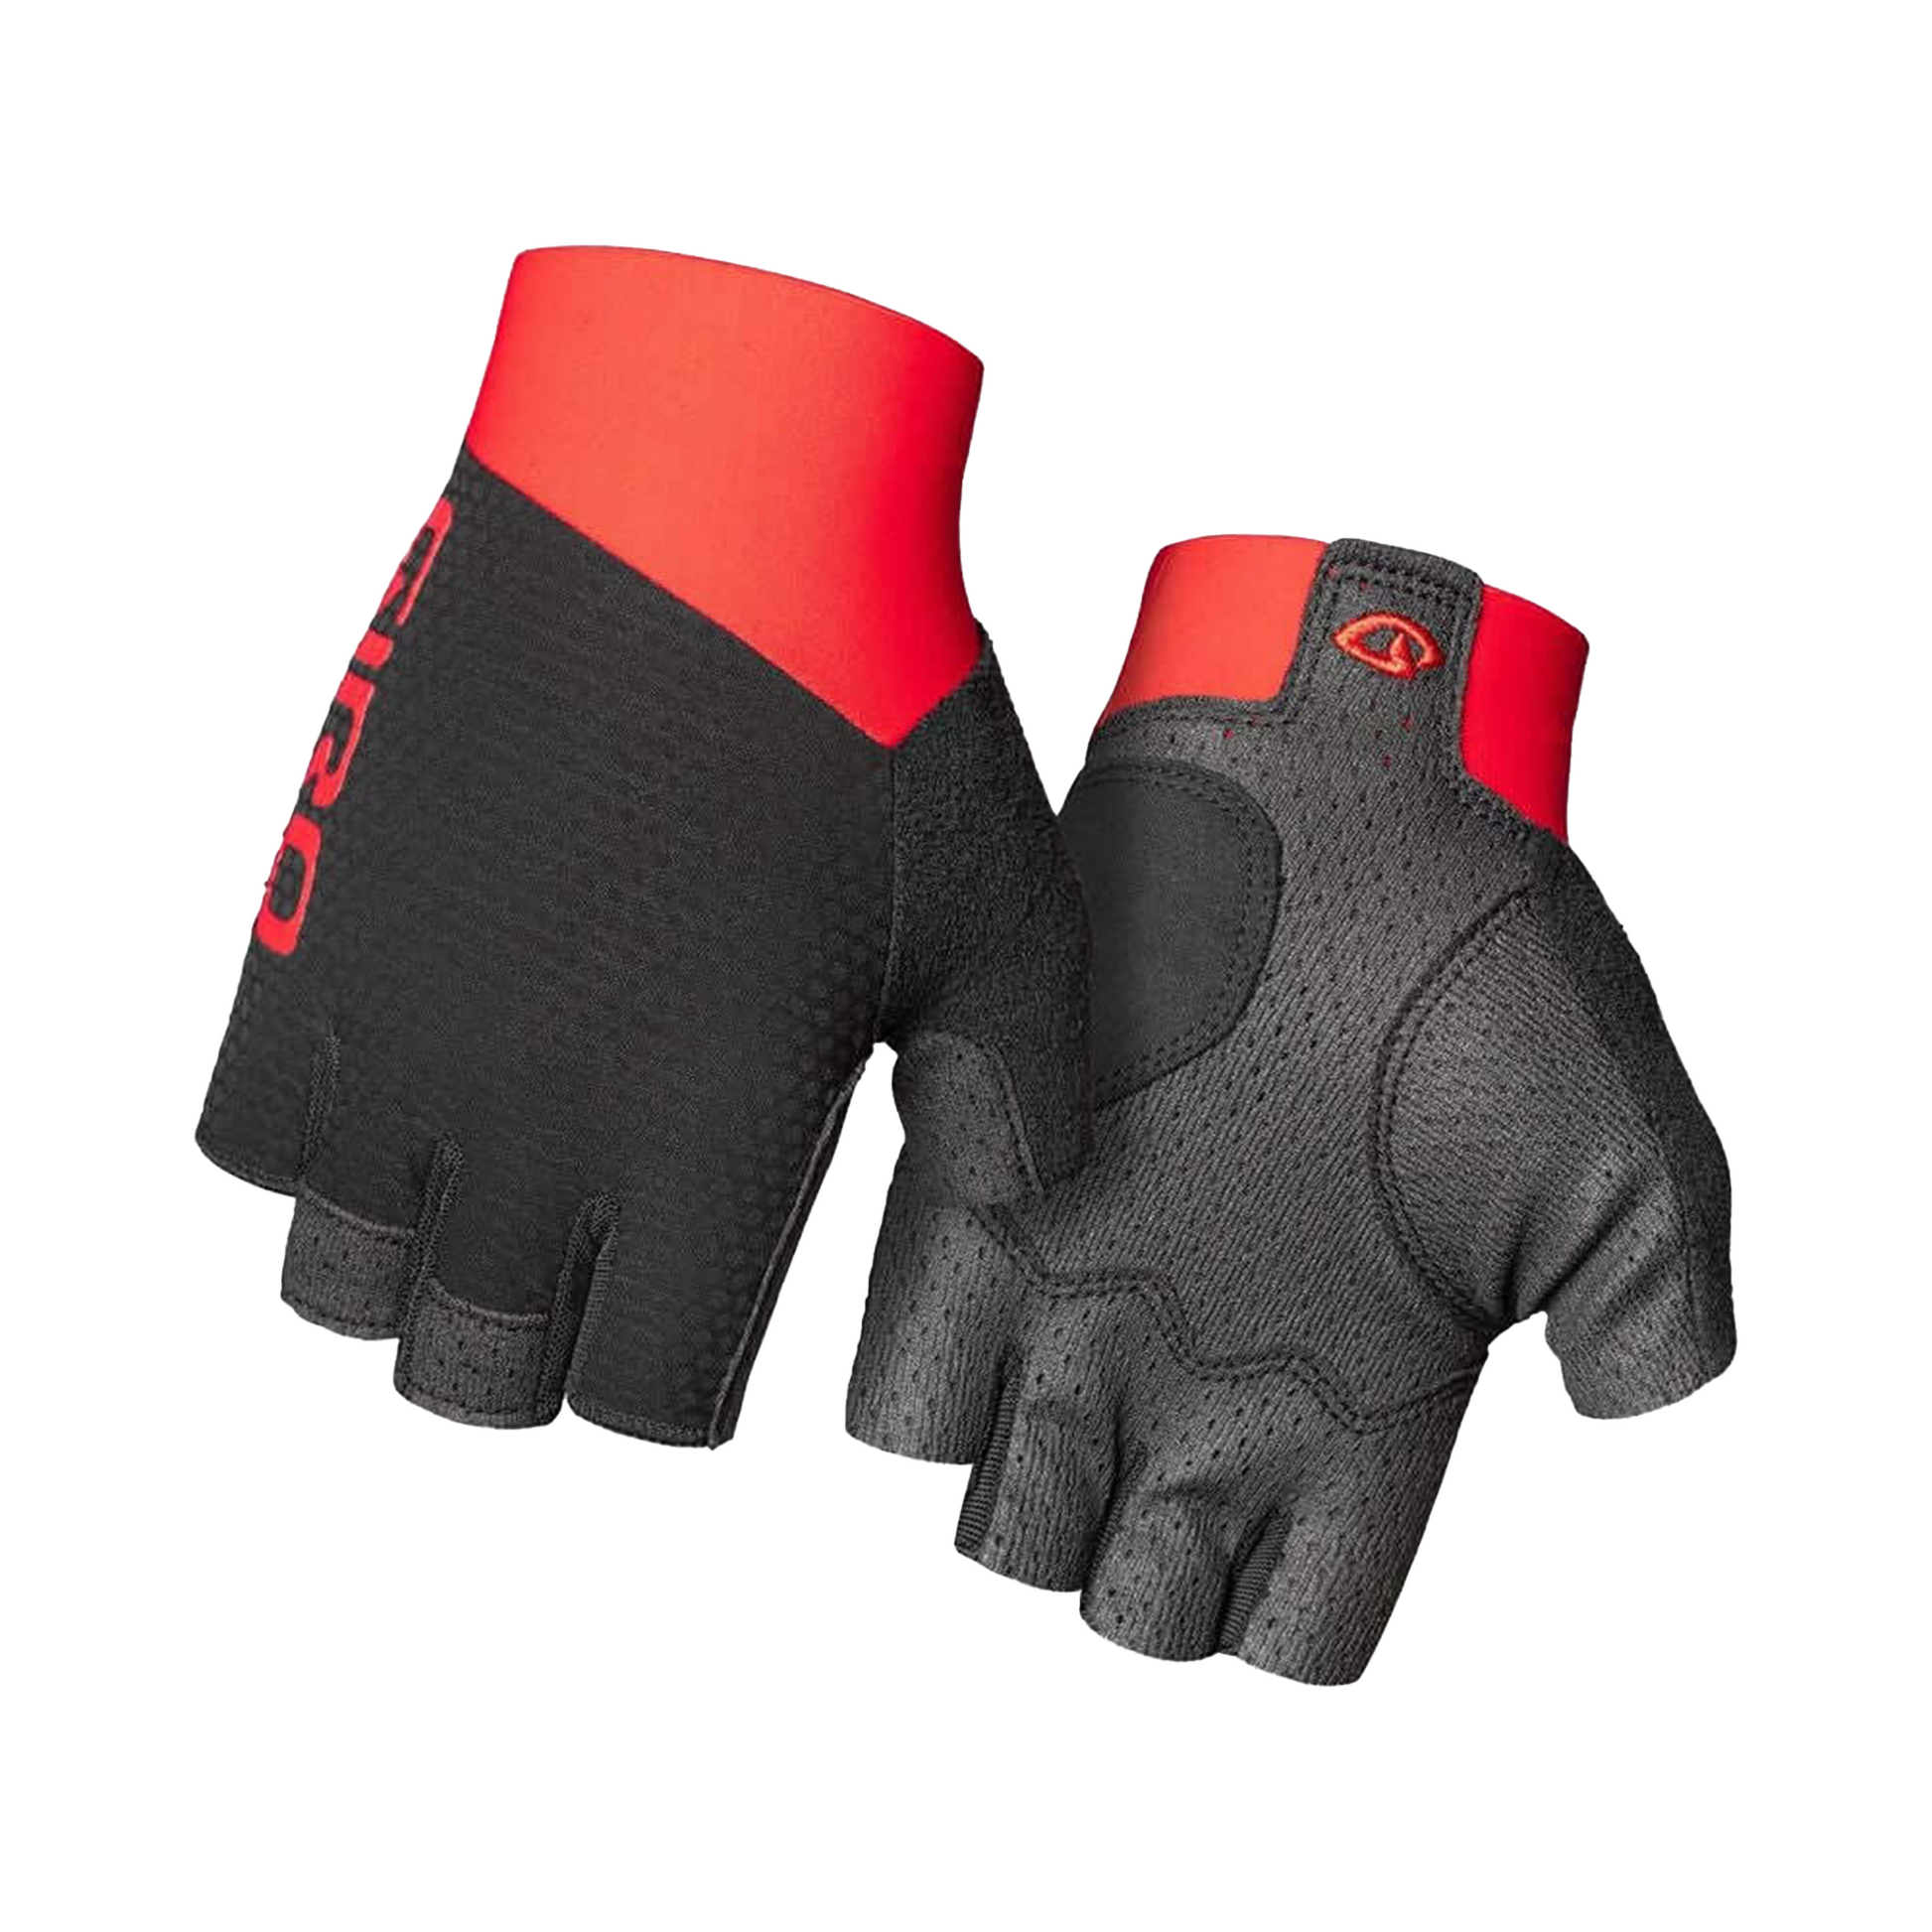 Giro Men's Zero CS Glove Trim Red Bike Gloves